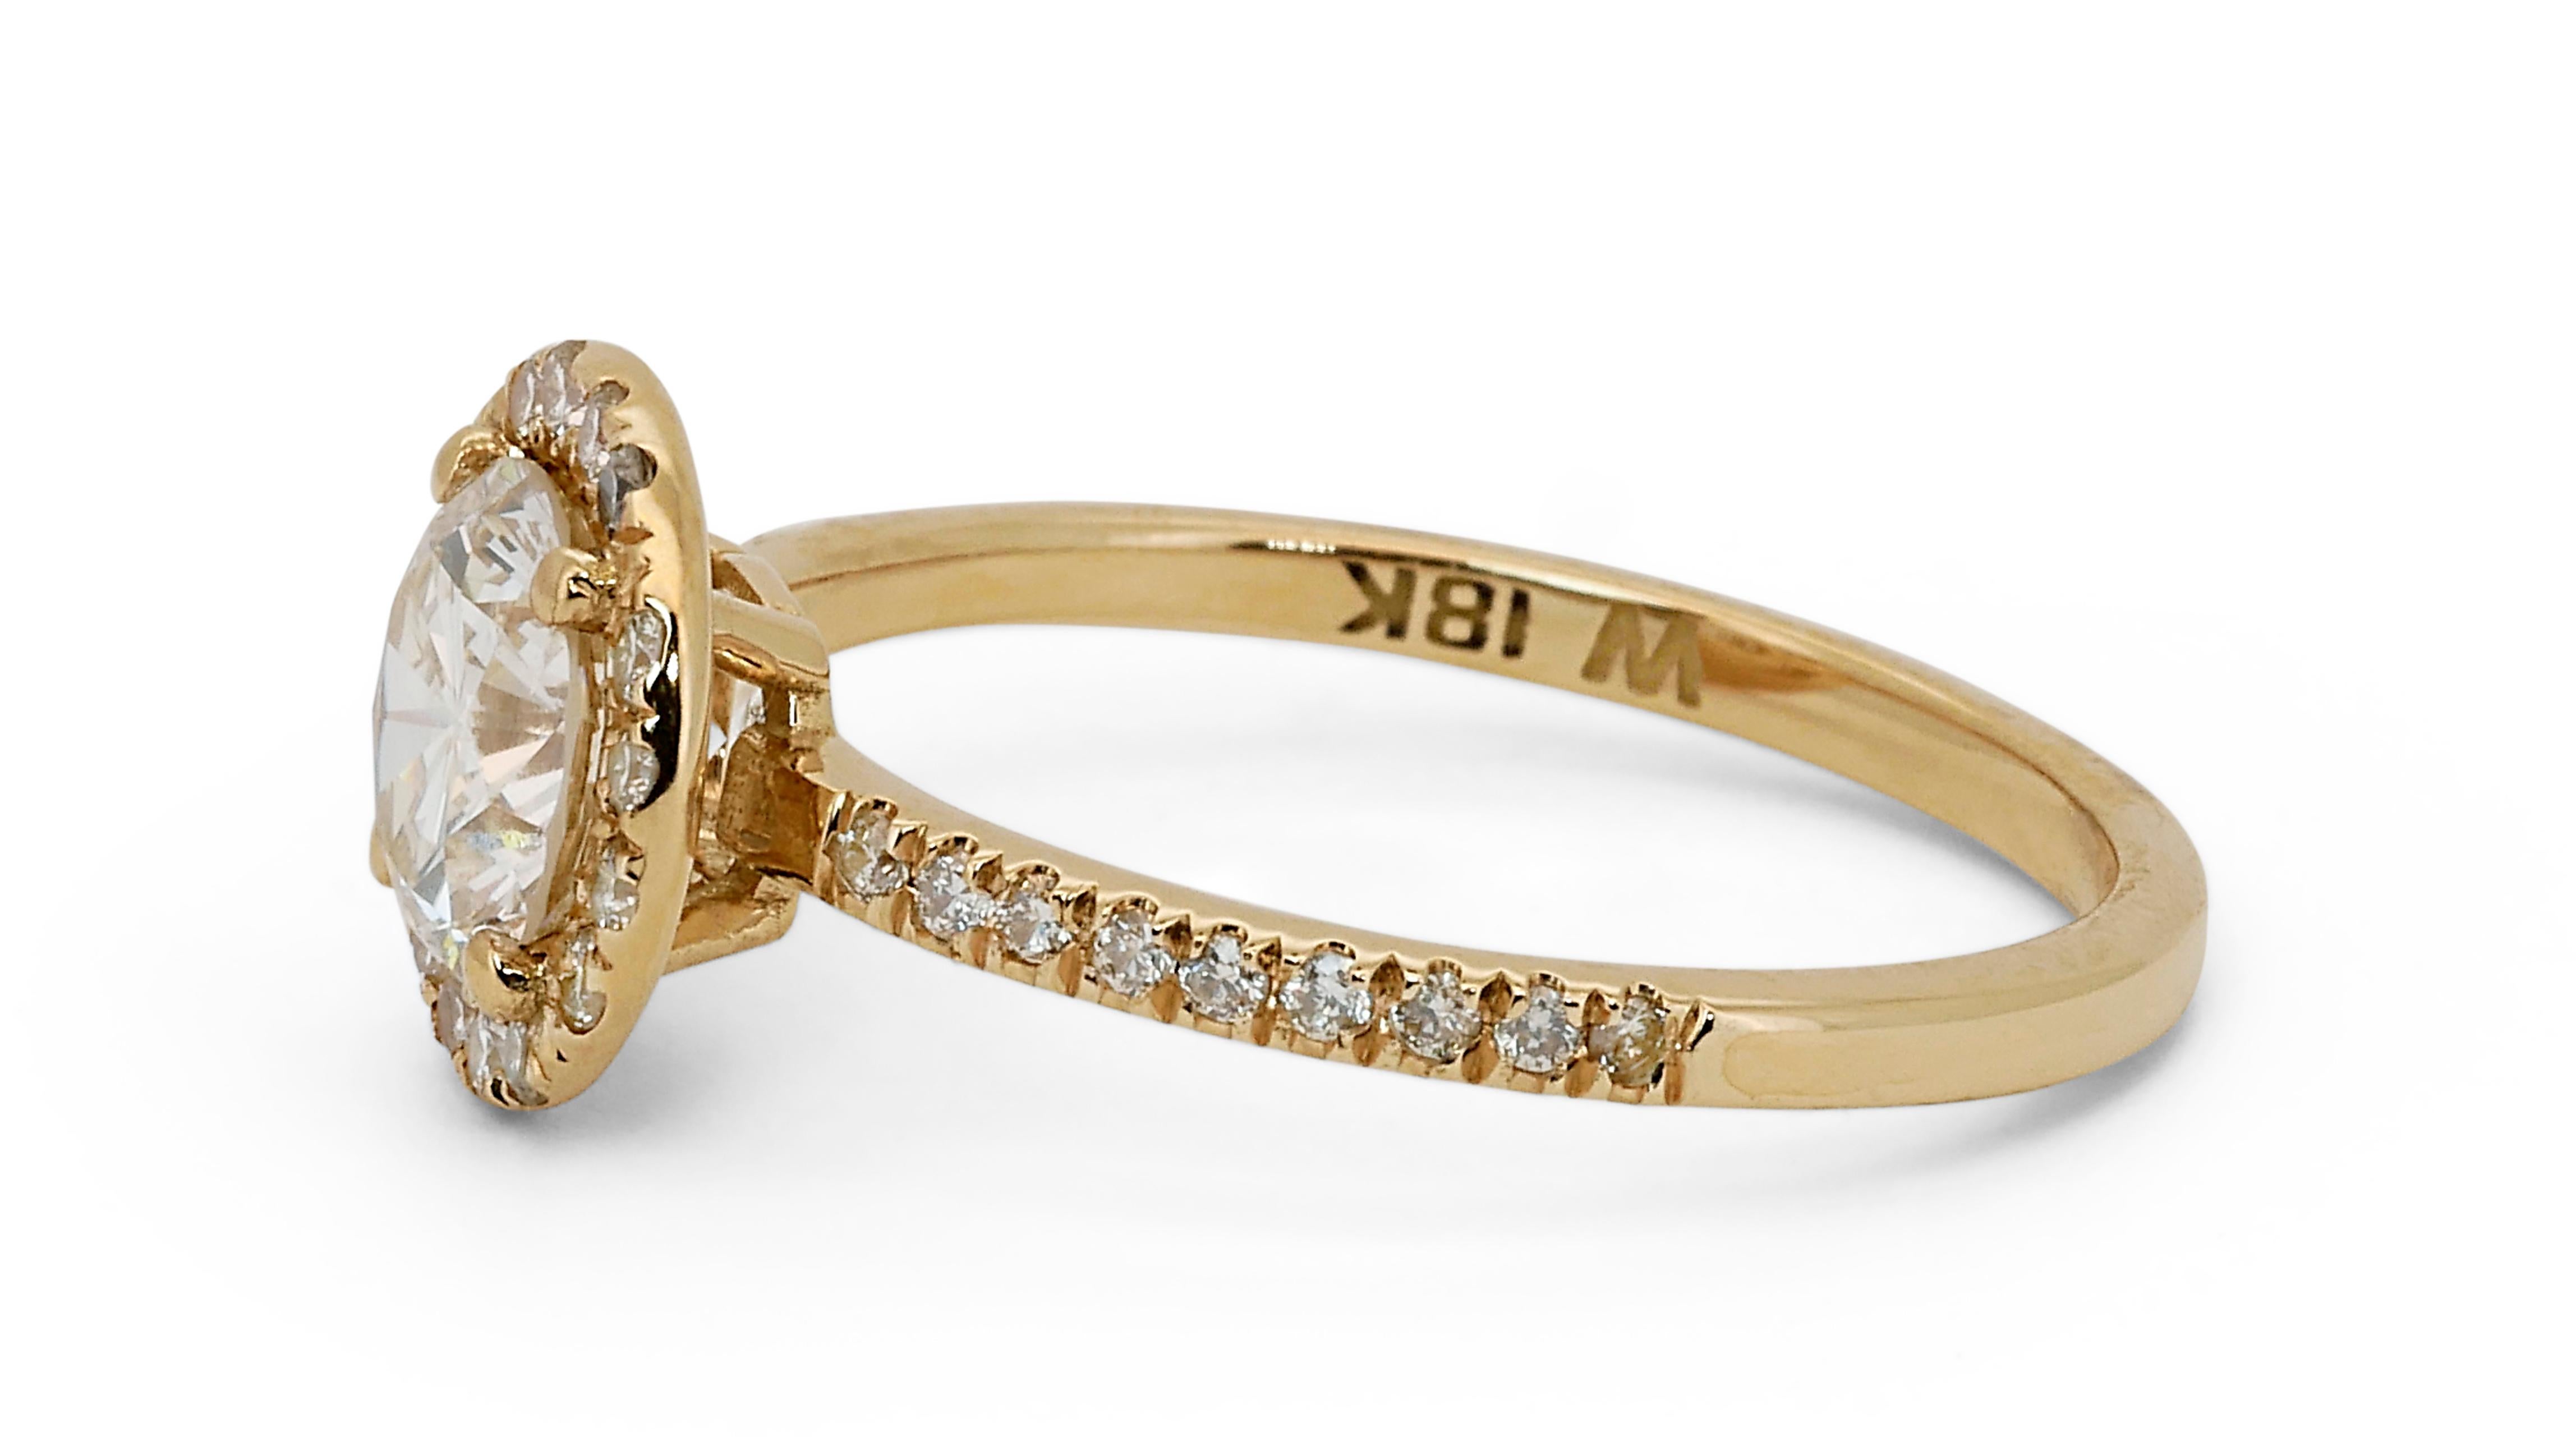 Stunning 18k Yellow Gold Halo Ring with 1.35 Natural Diamonds IGI Certificate 1